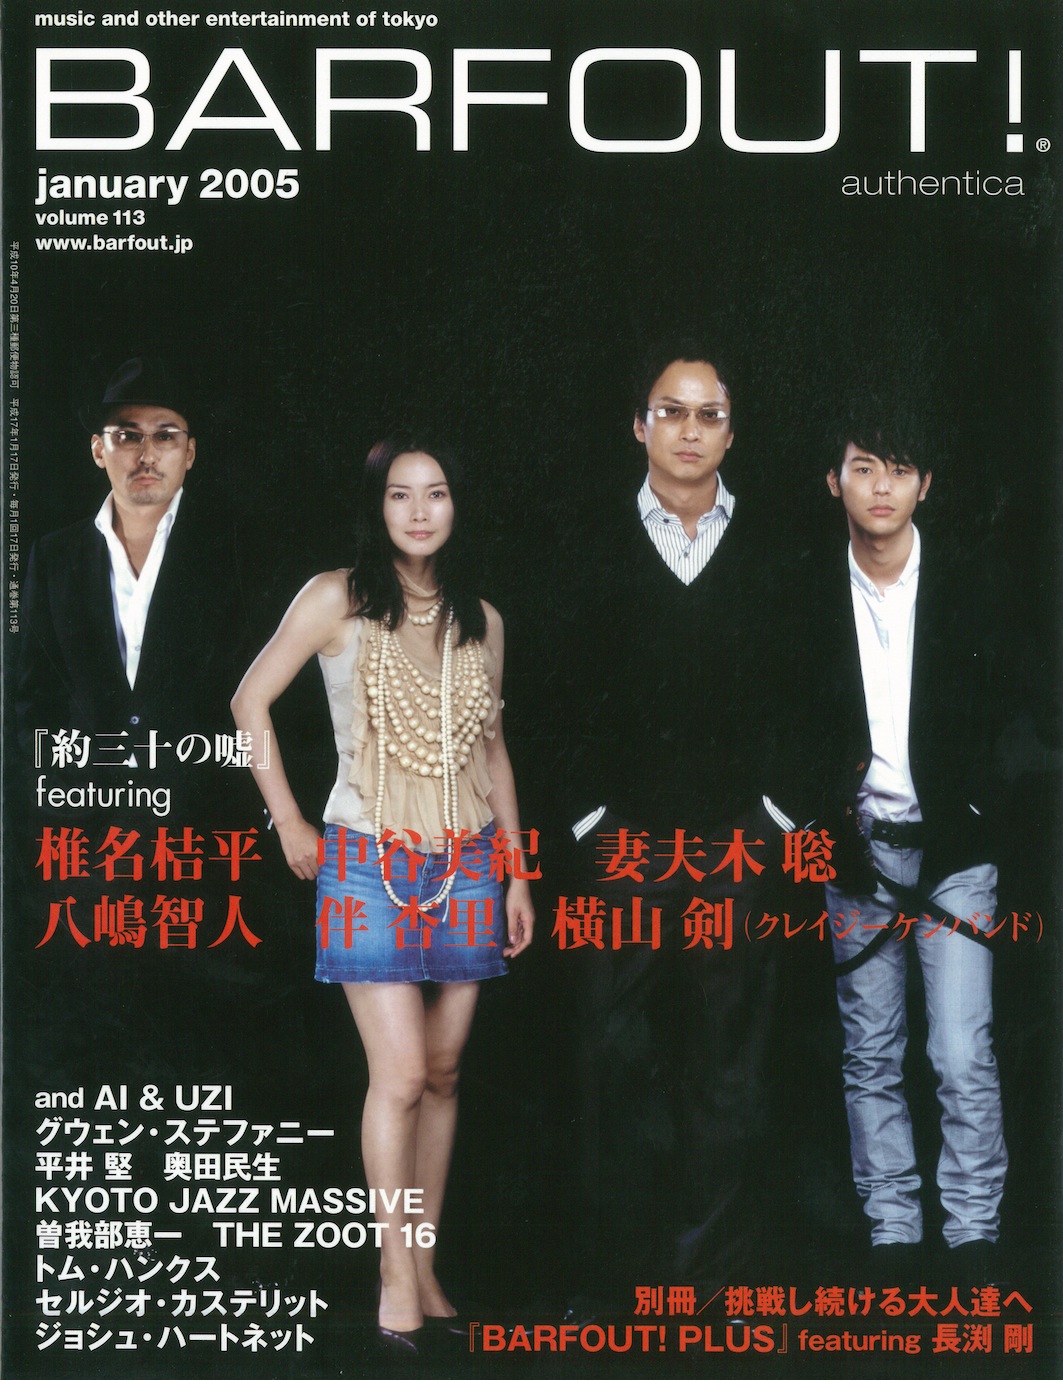 JANUARY 2005 VOLUME 113